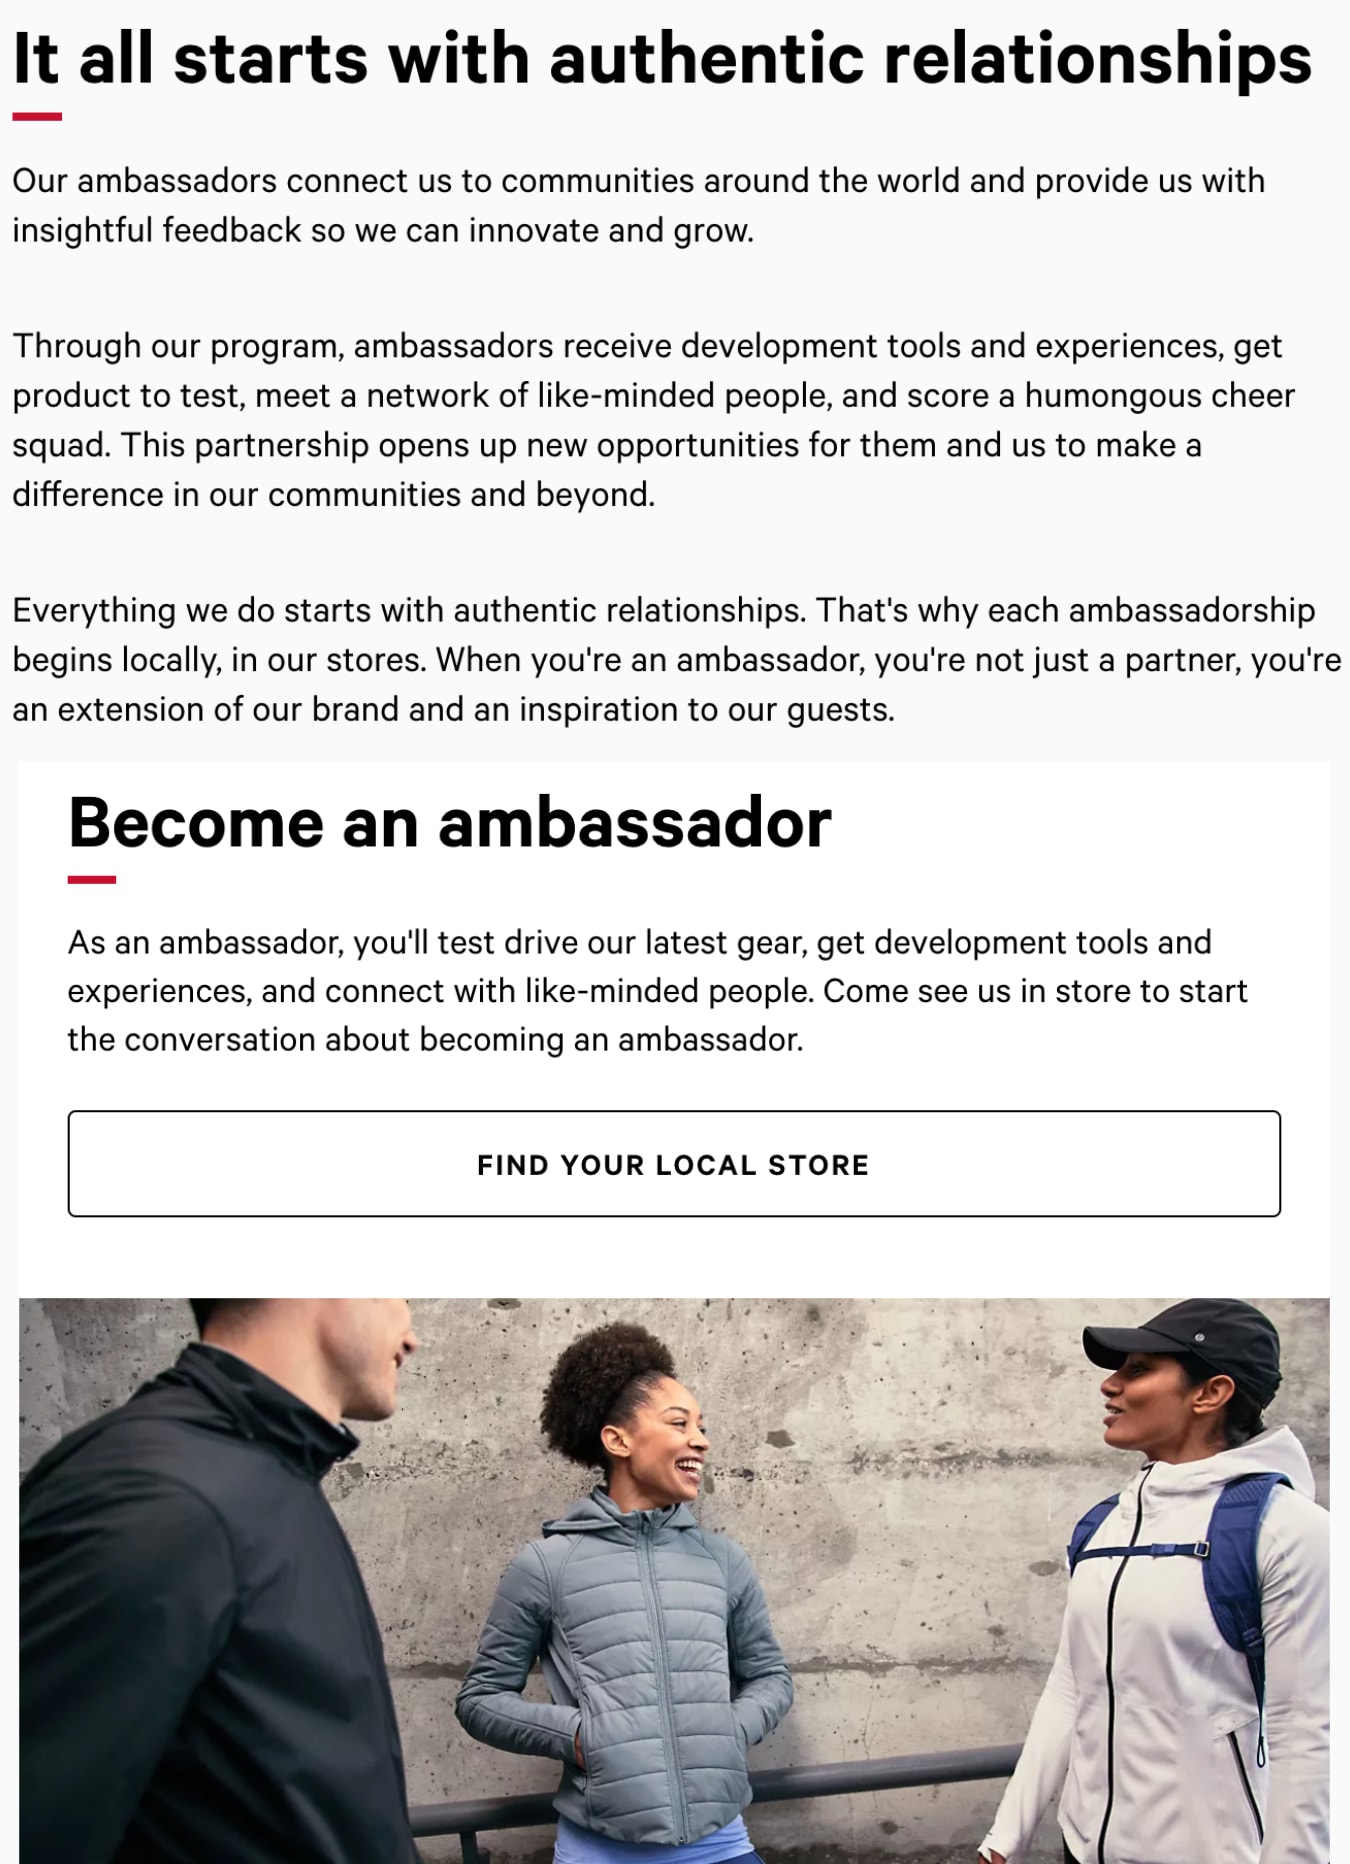 Lululemon runs a successful ambassador program.